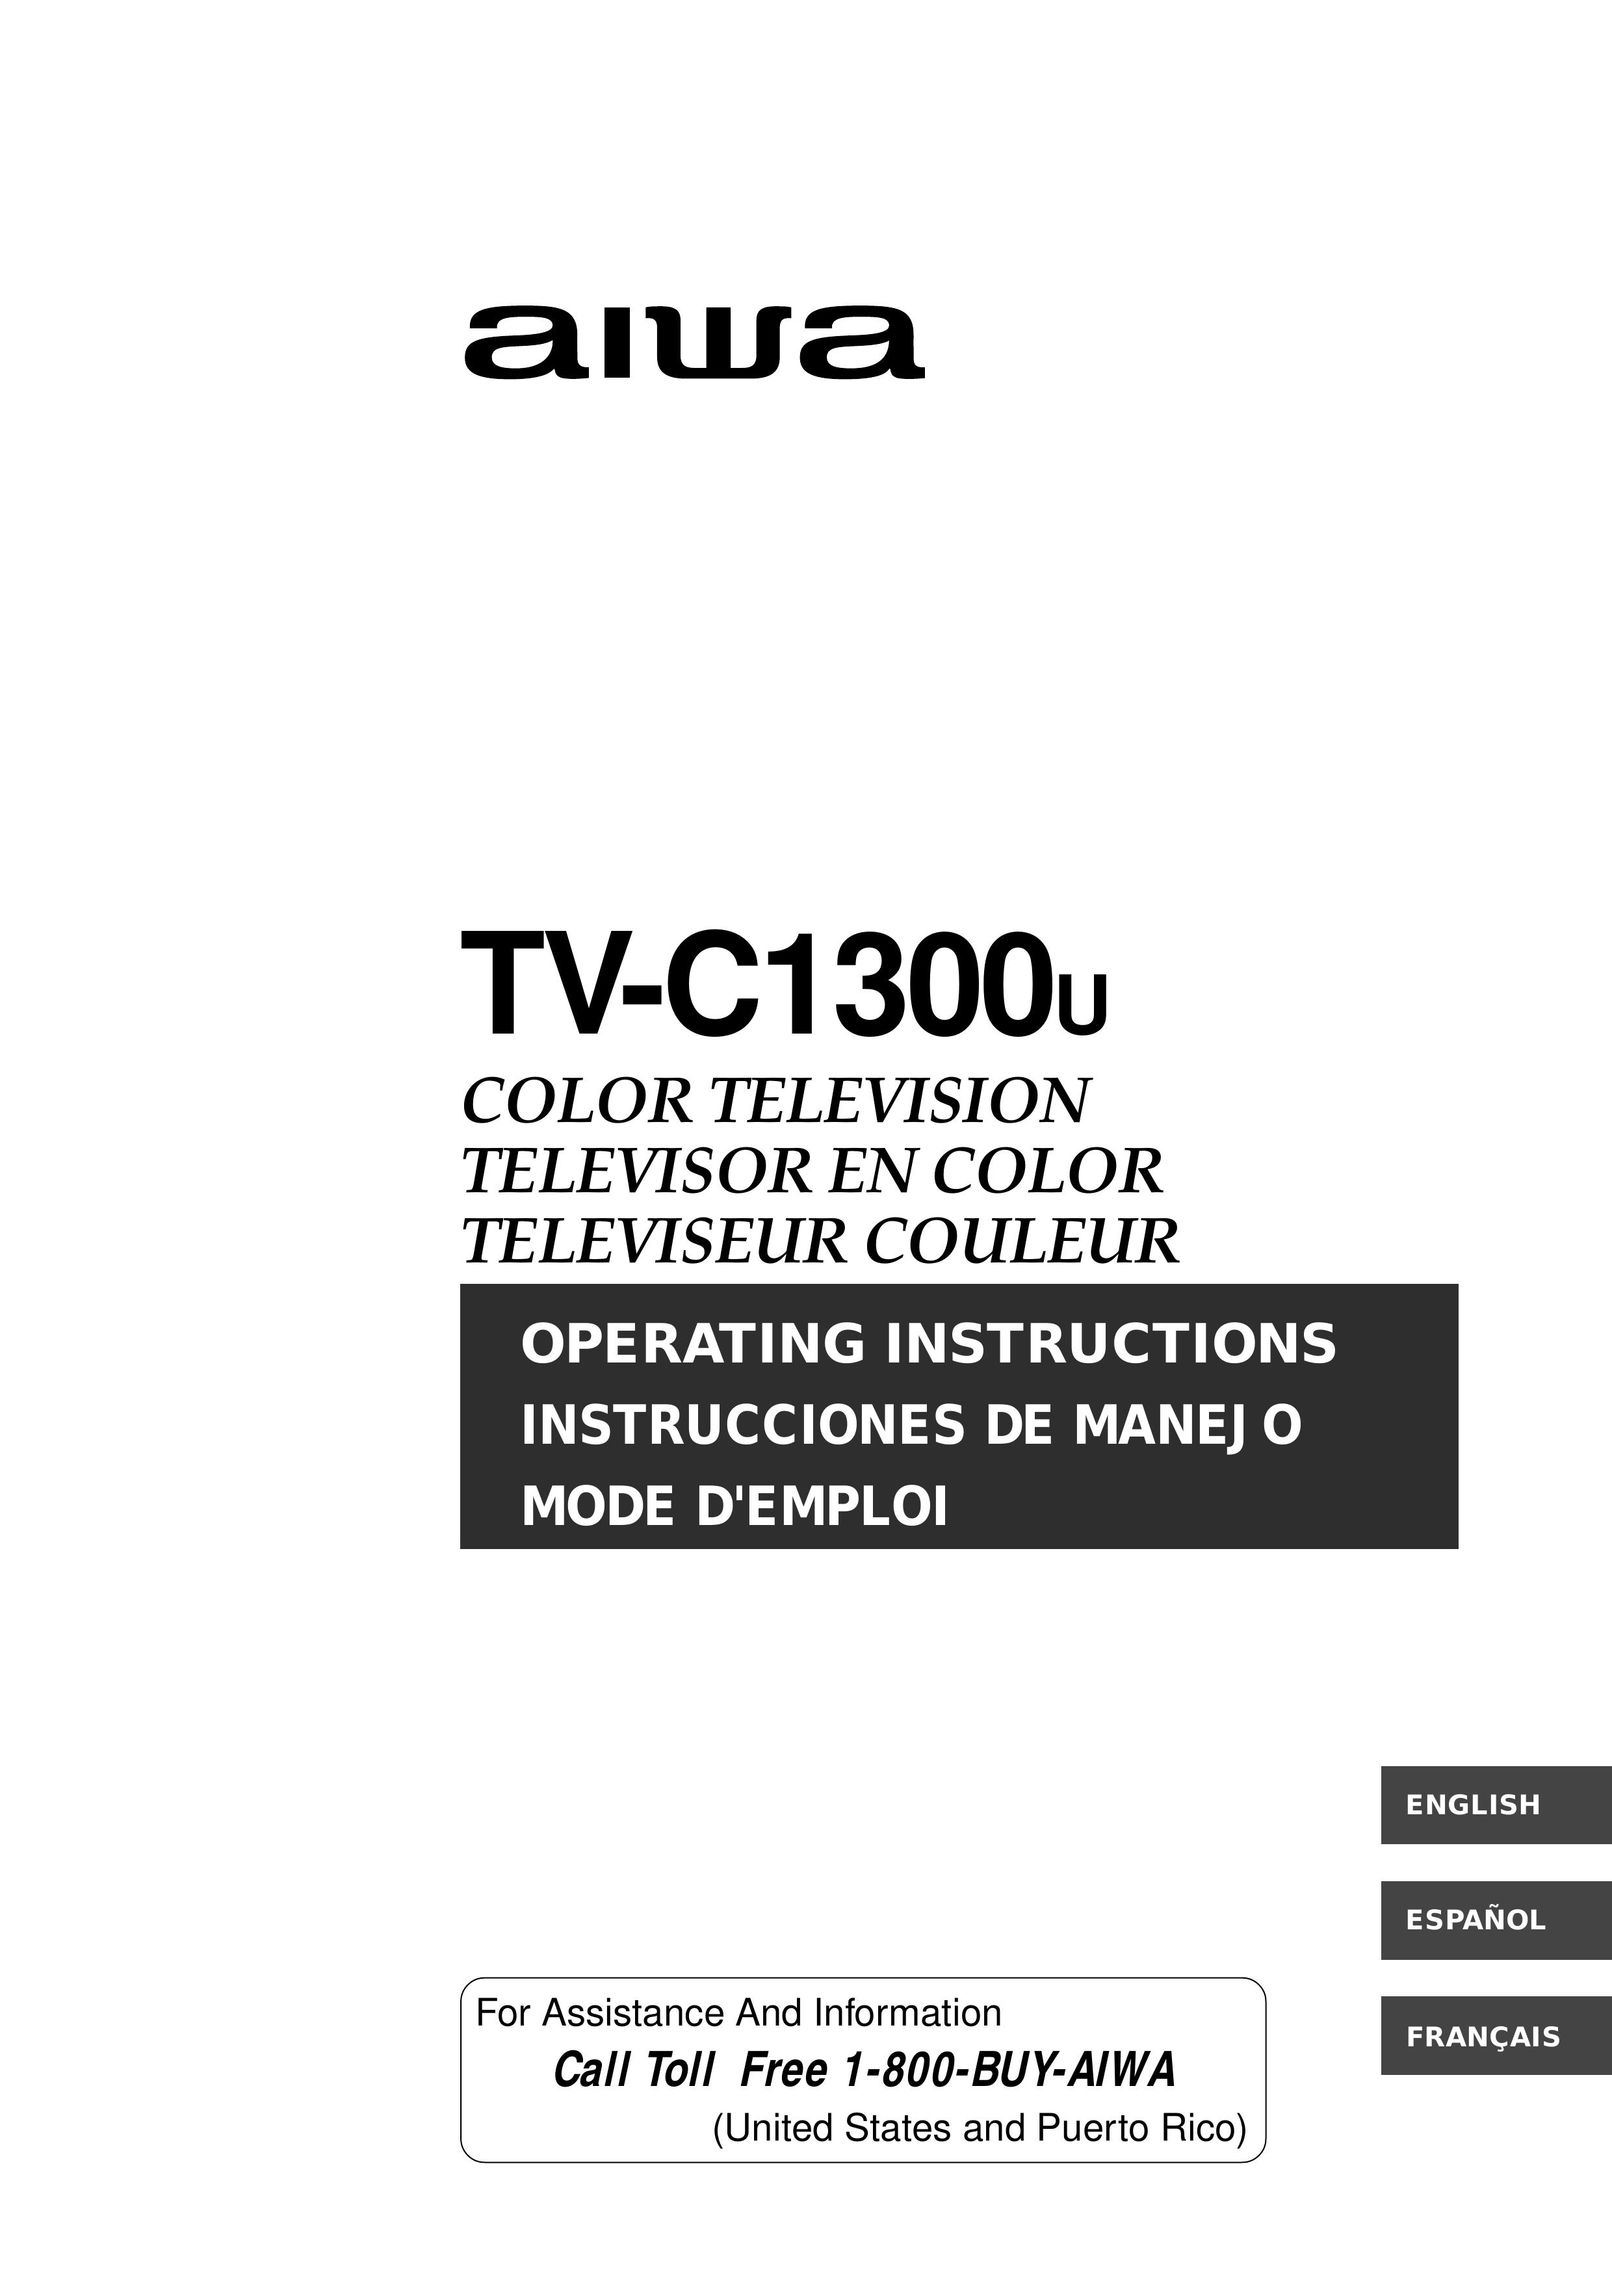 Aiwa TV-C1300U CRT Television User Manual